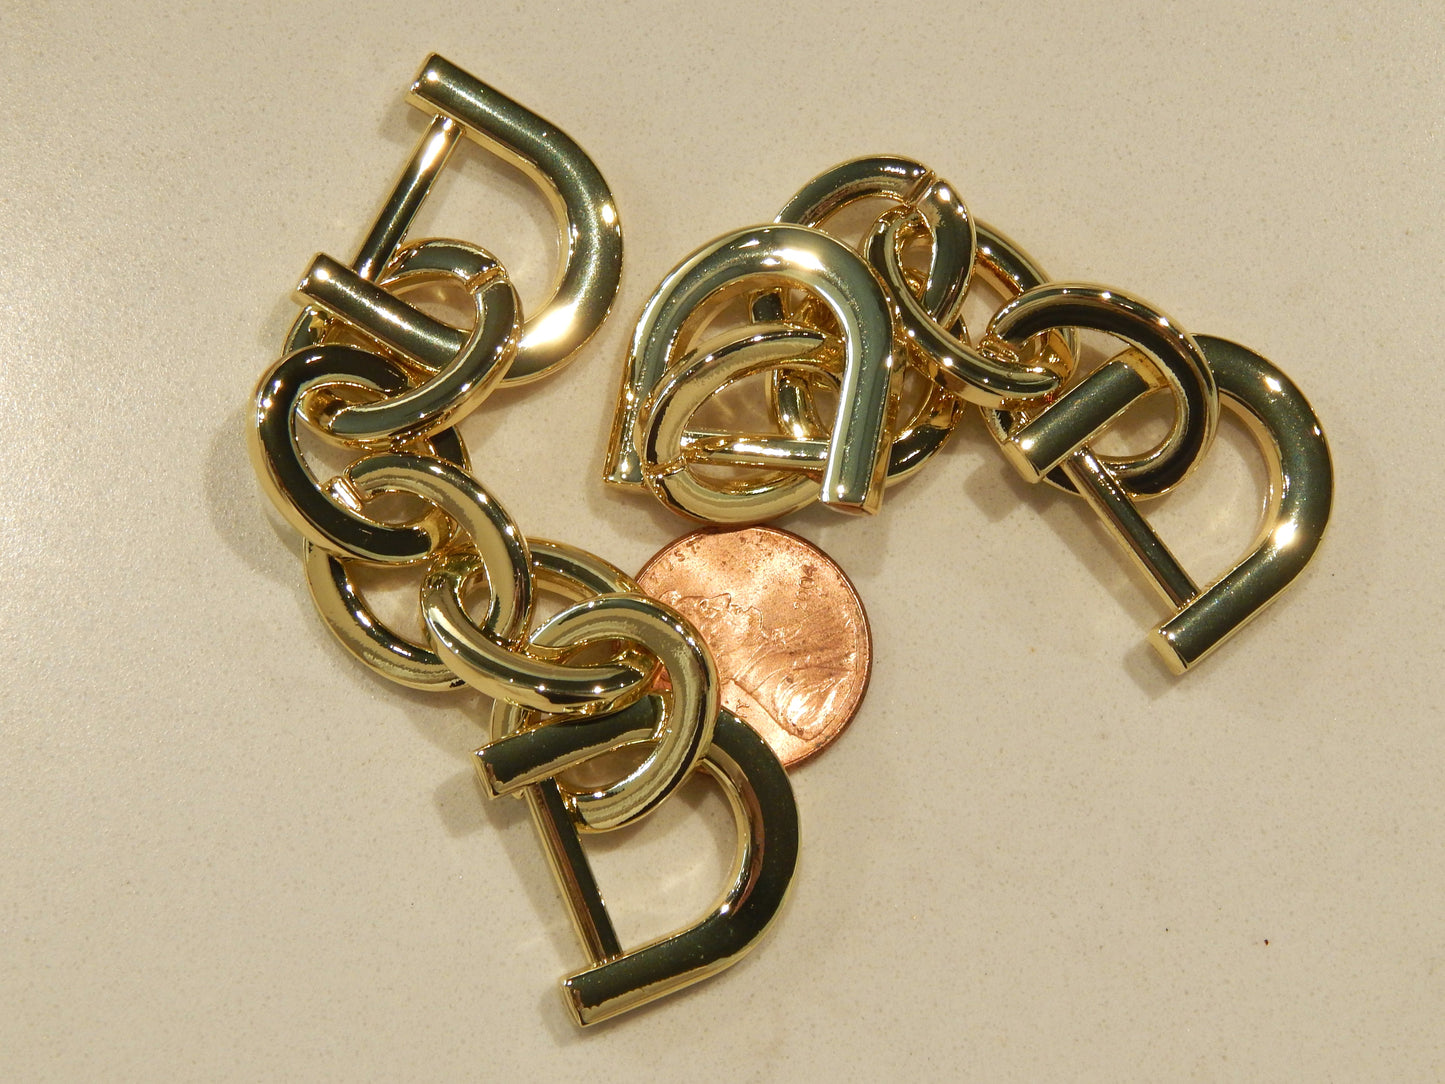 Chain Connectors - 3.75" x 7/8" - Gold, Silver, & Iridescent